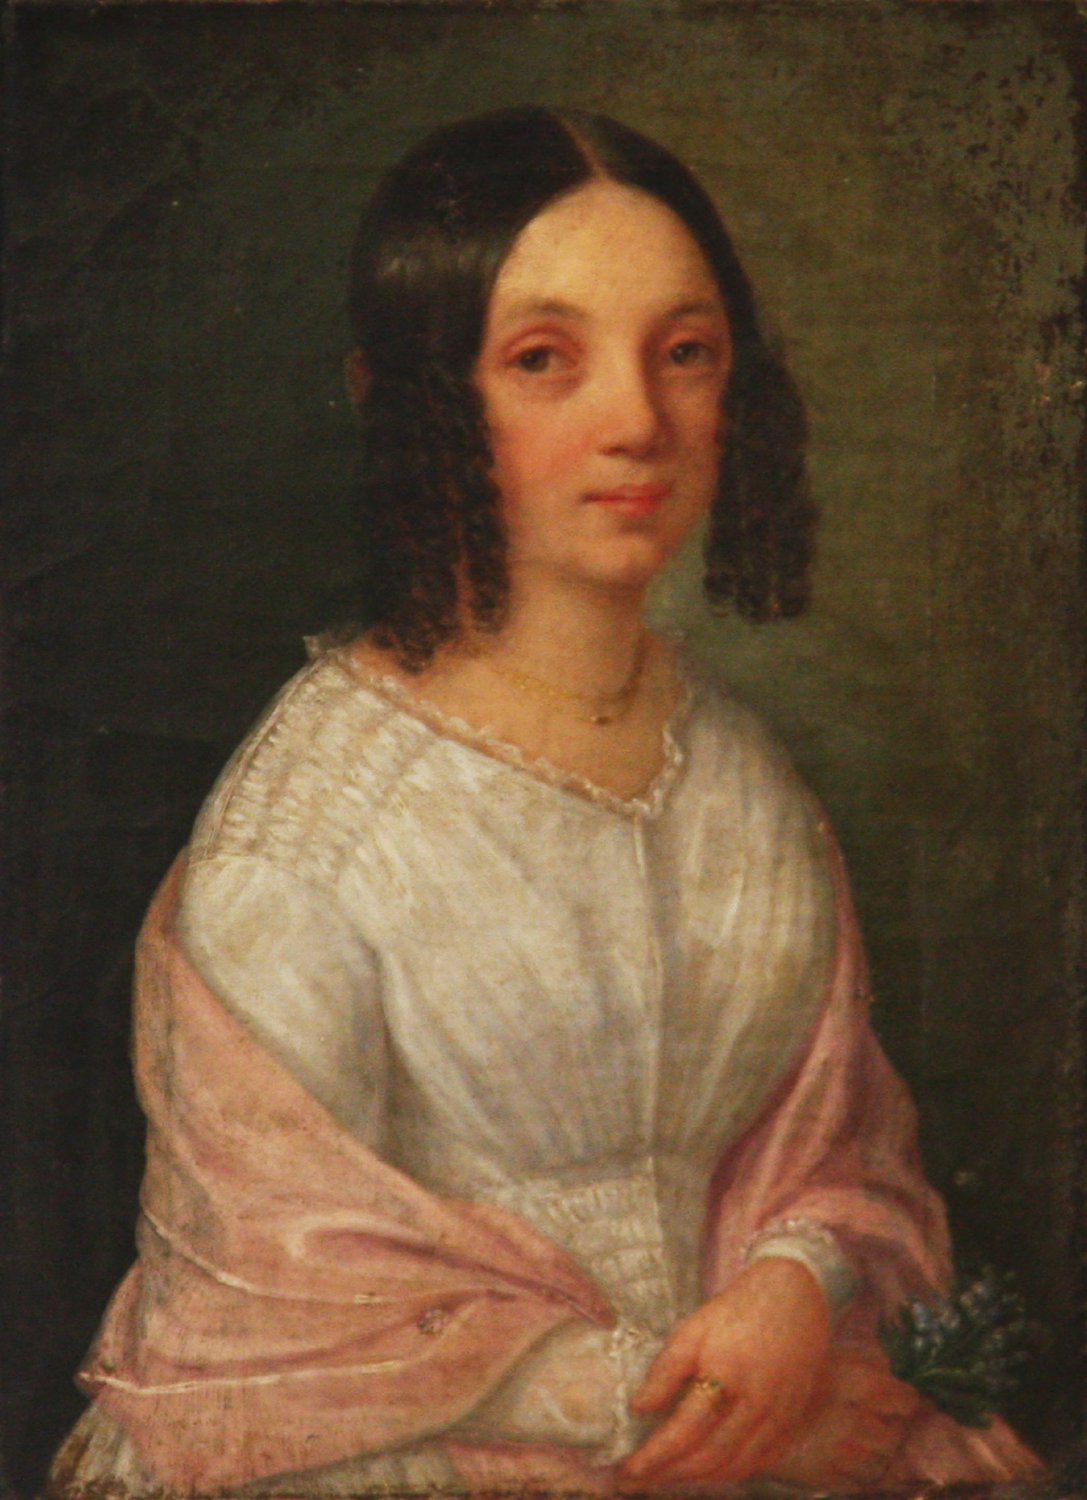 Original painting: Portrait of a girl in a white dress. Biedermeier. Unknown German artist